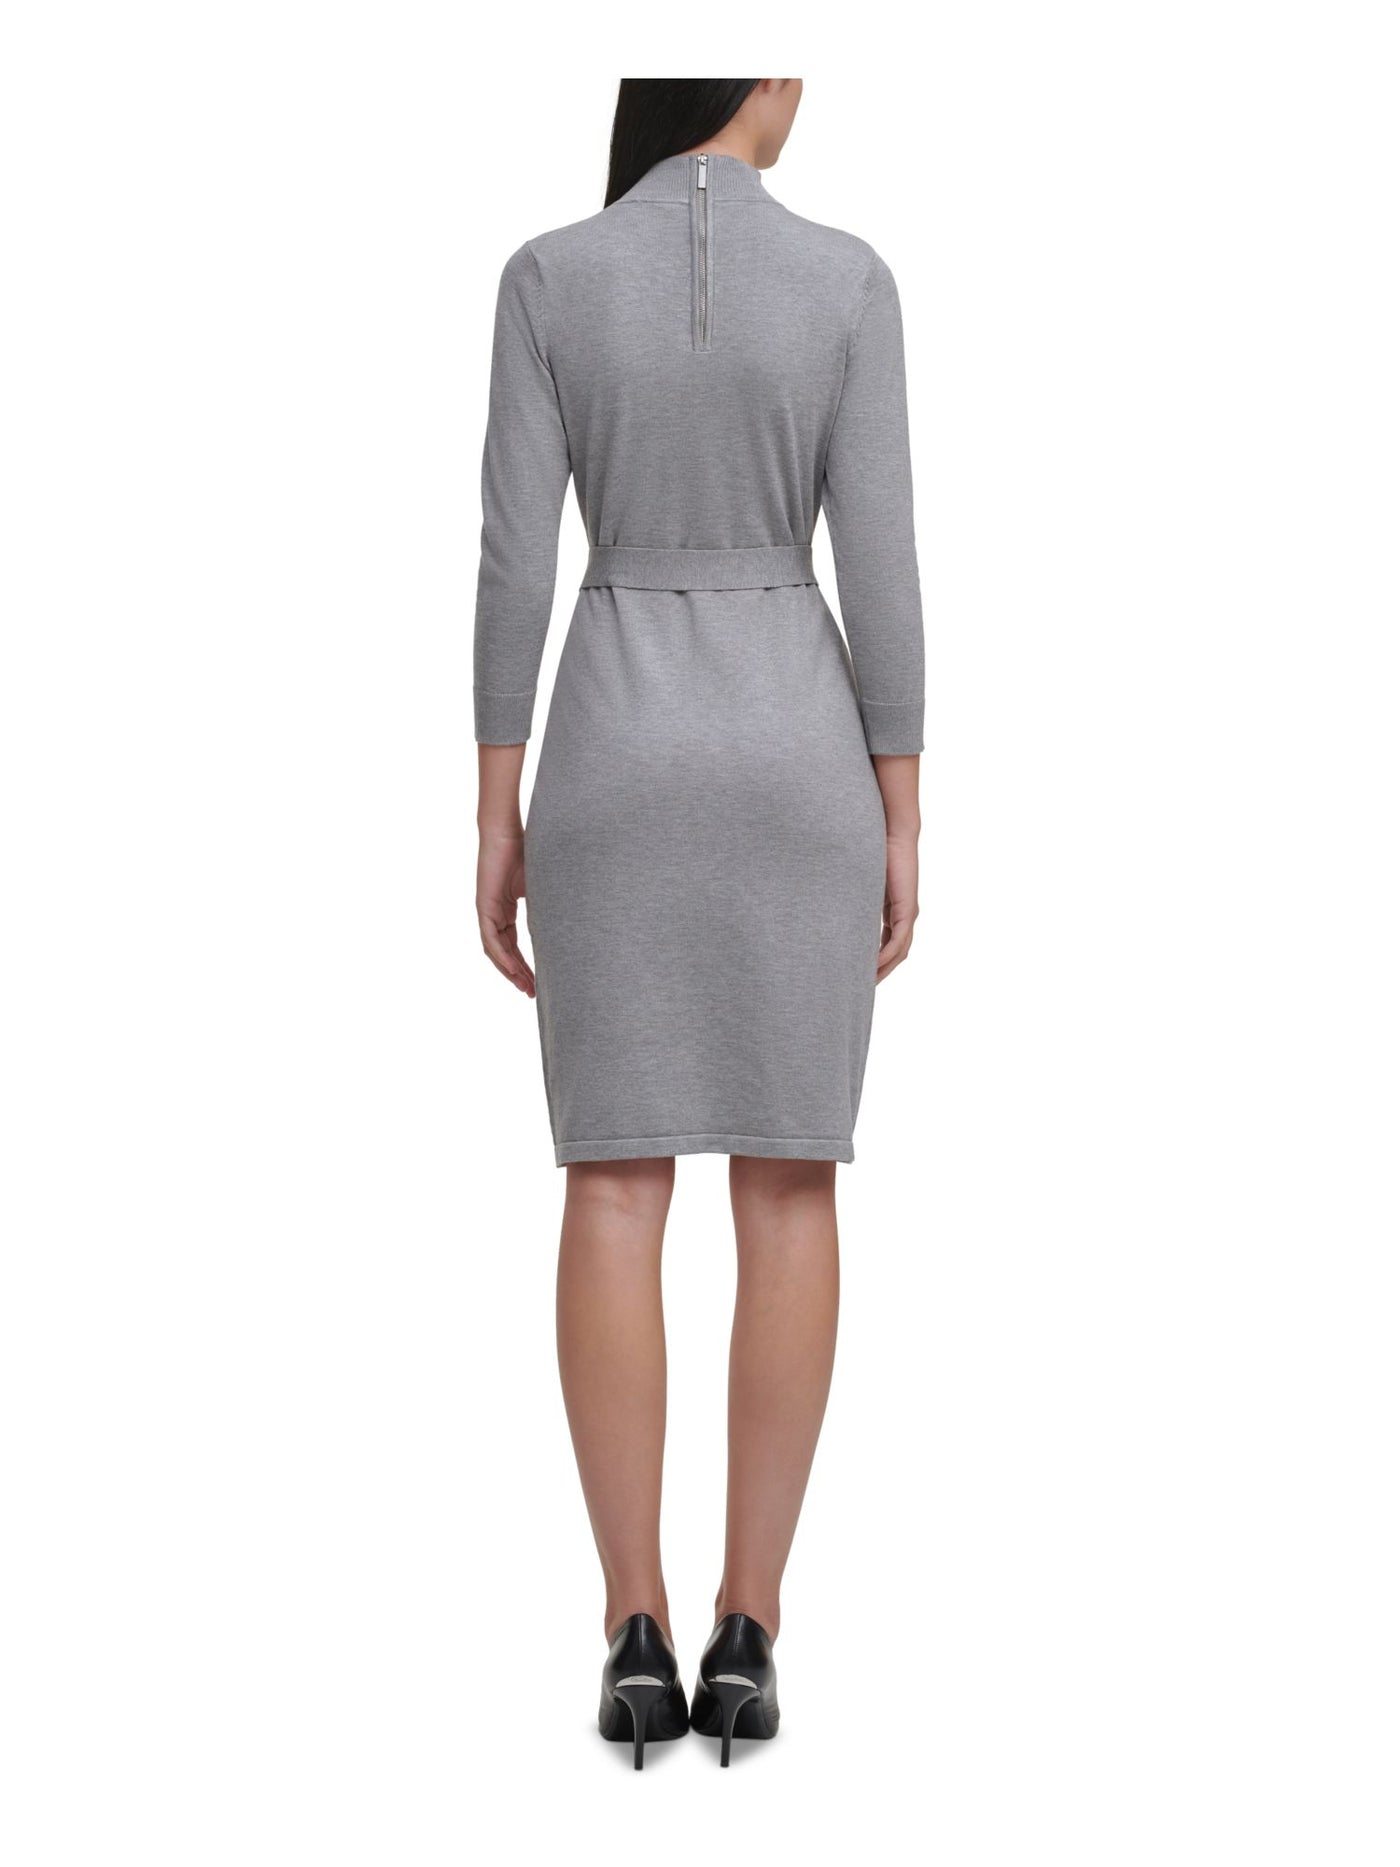 CALVIN KLEIN Womens Gray Tie Zippered Sweater 3/4 Sleeve Mock Above The Knee Evening Sheath Dress L